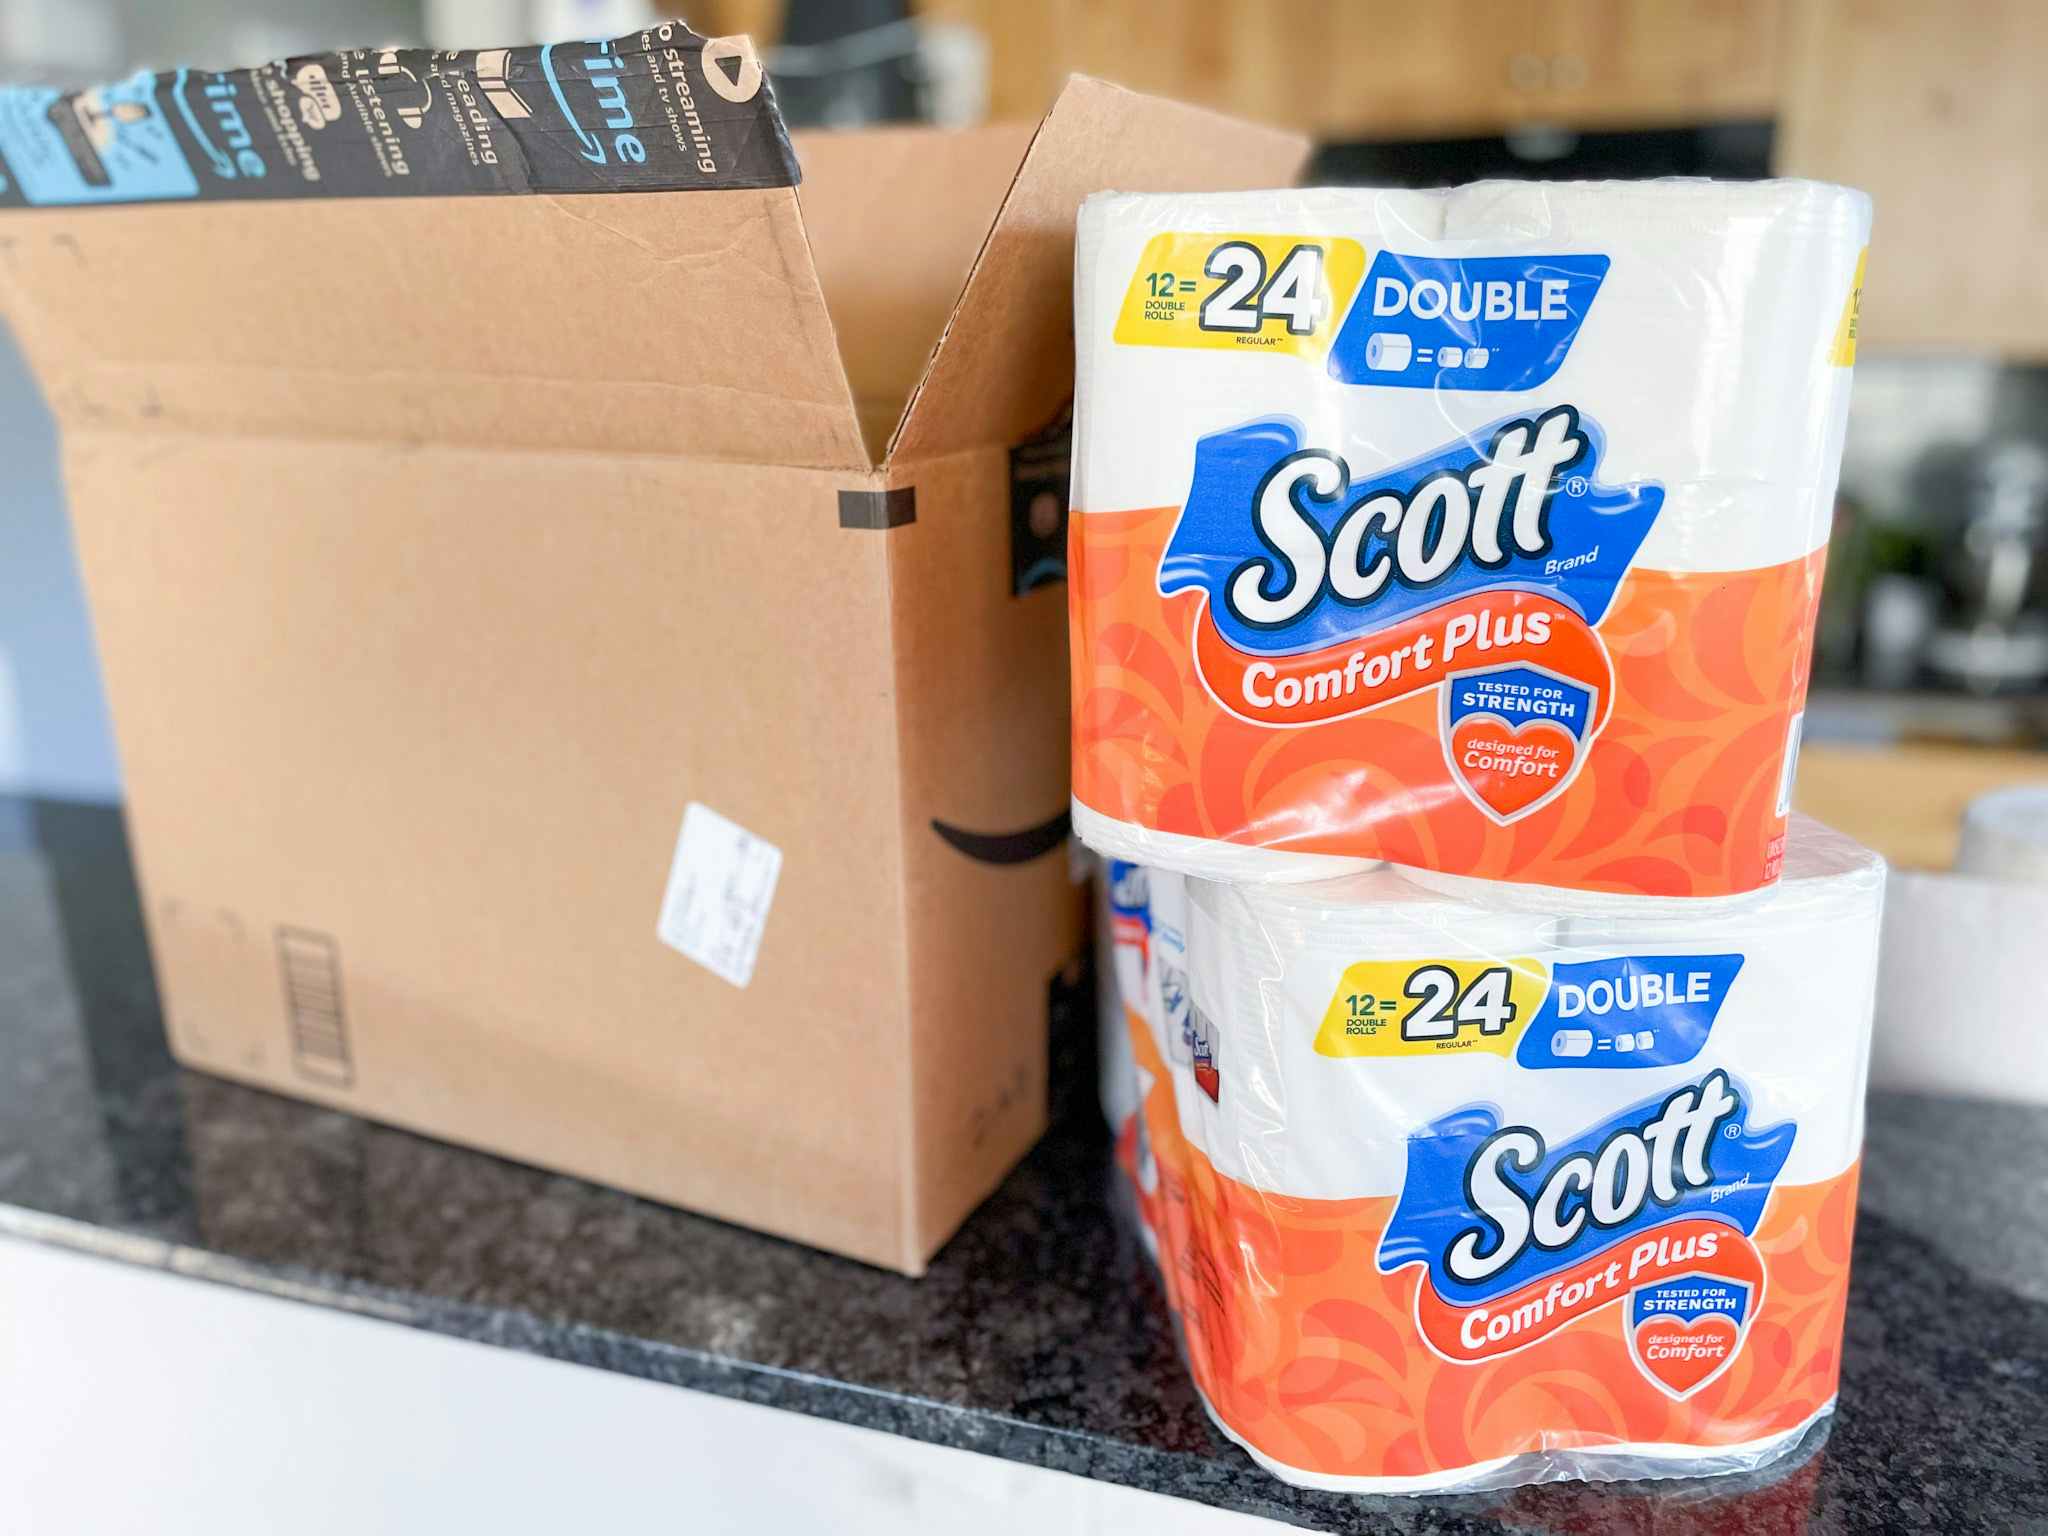 Scott ComfortPlus Toilet Paper: Get 12 Double Rolls for $4.19 on Amazon